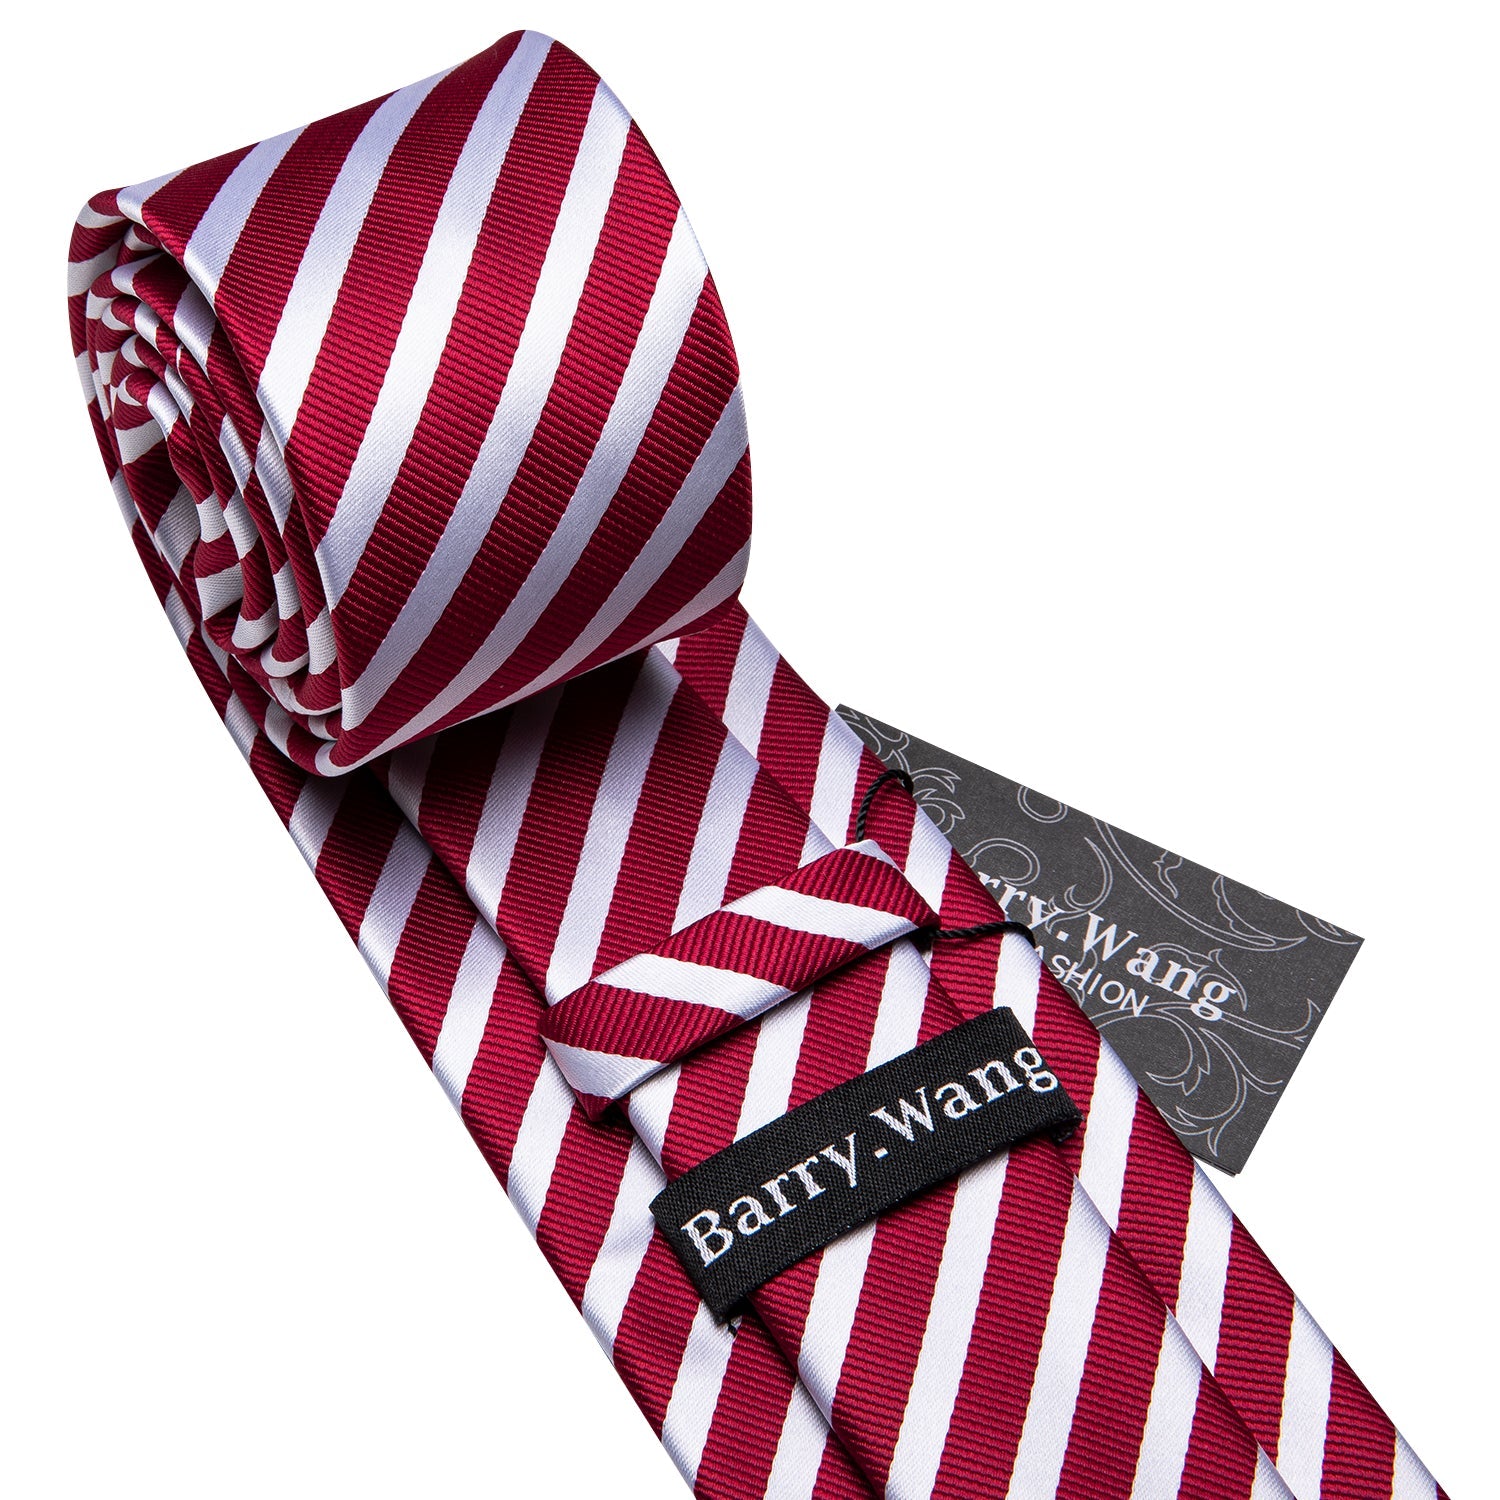 White and Red Stripe Tie Hanky Cufflinks Gift Box Set